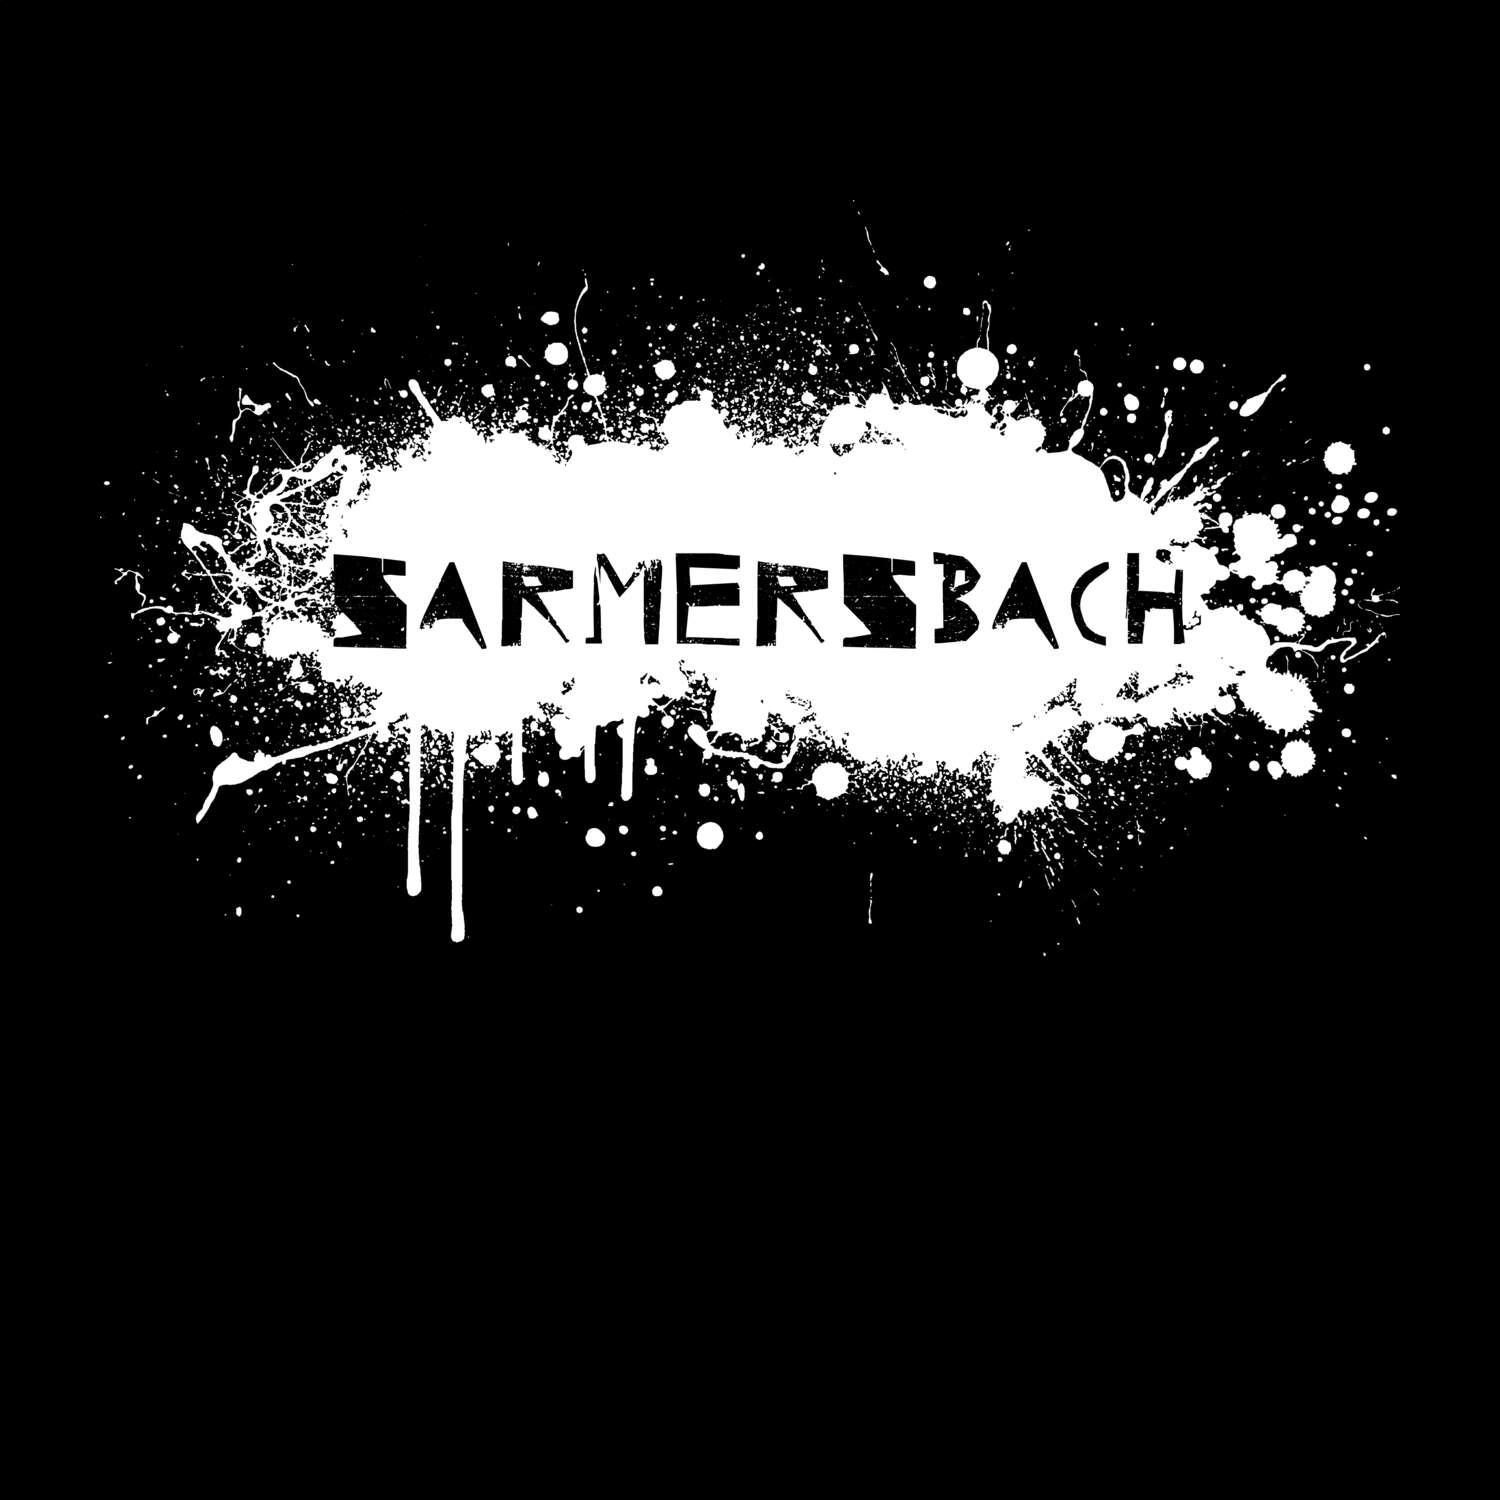 Sarmersbach T-Shirt »Paint Splash Punk«